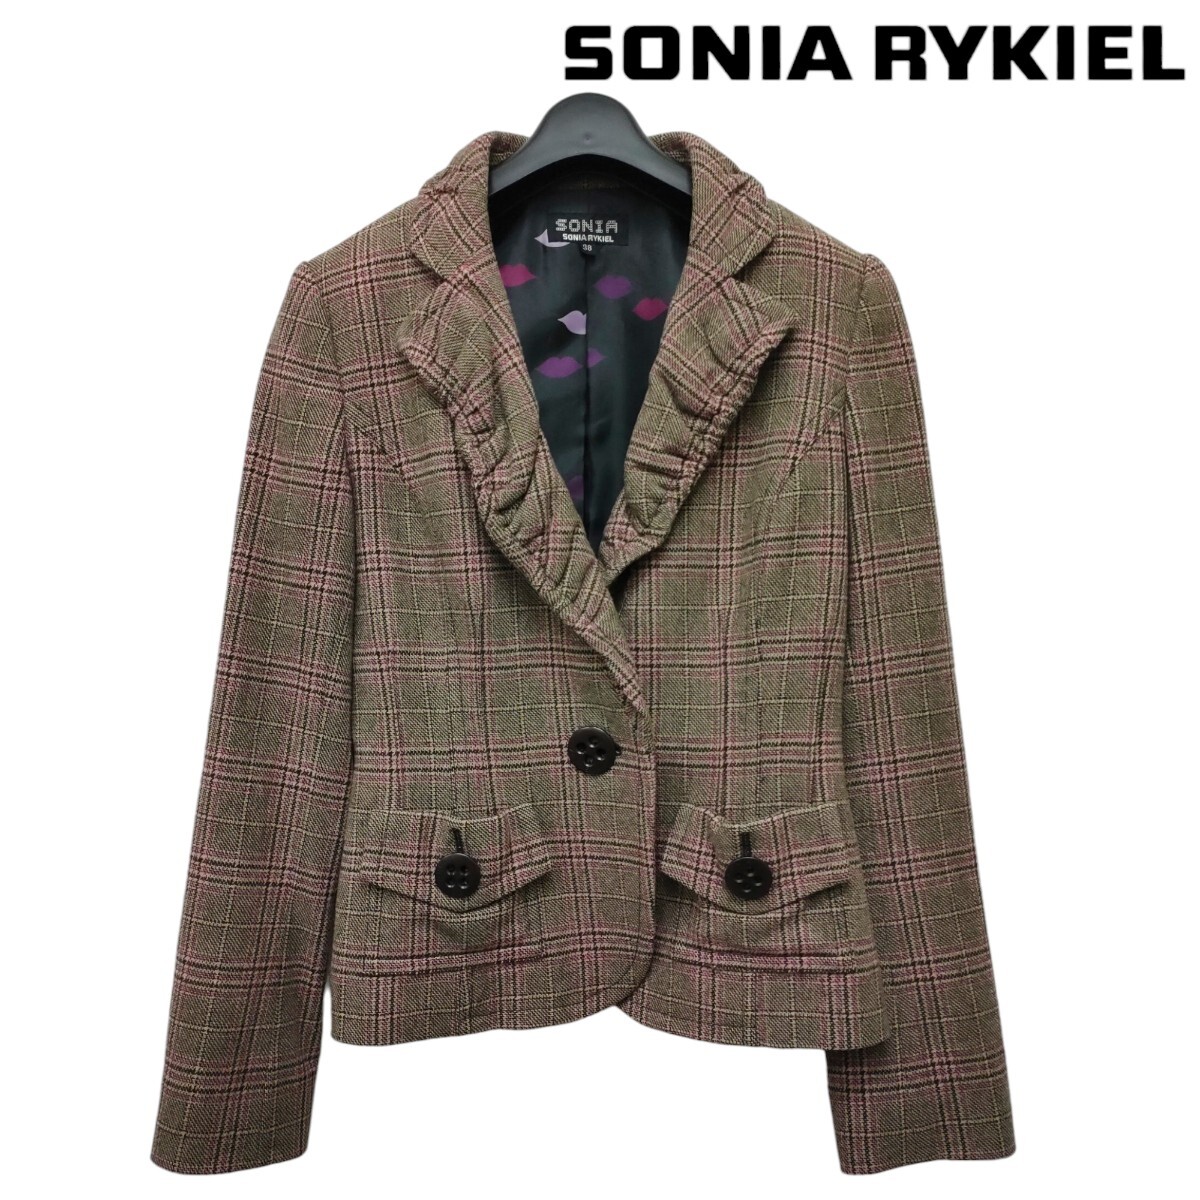 SONIA SONIA RYKIEL/ソニアリキエル レディース ウール混 テーラードジャケット ブラウン×ピンク系チェック柄 38サイズ I-3672_画像1